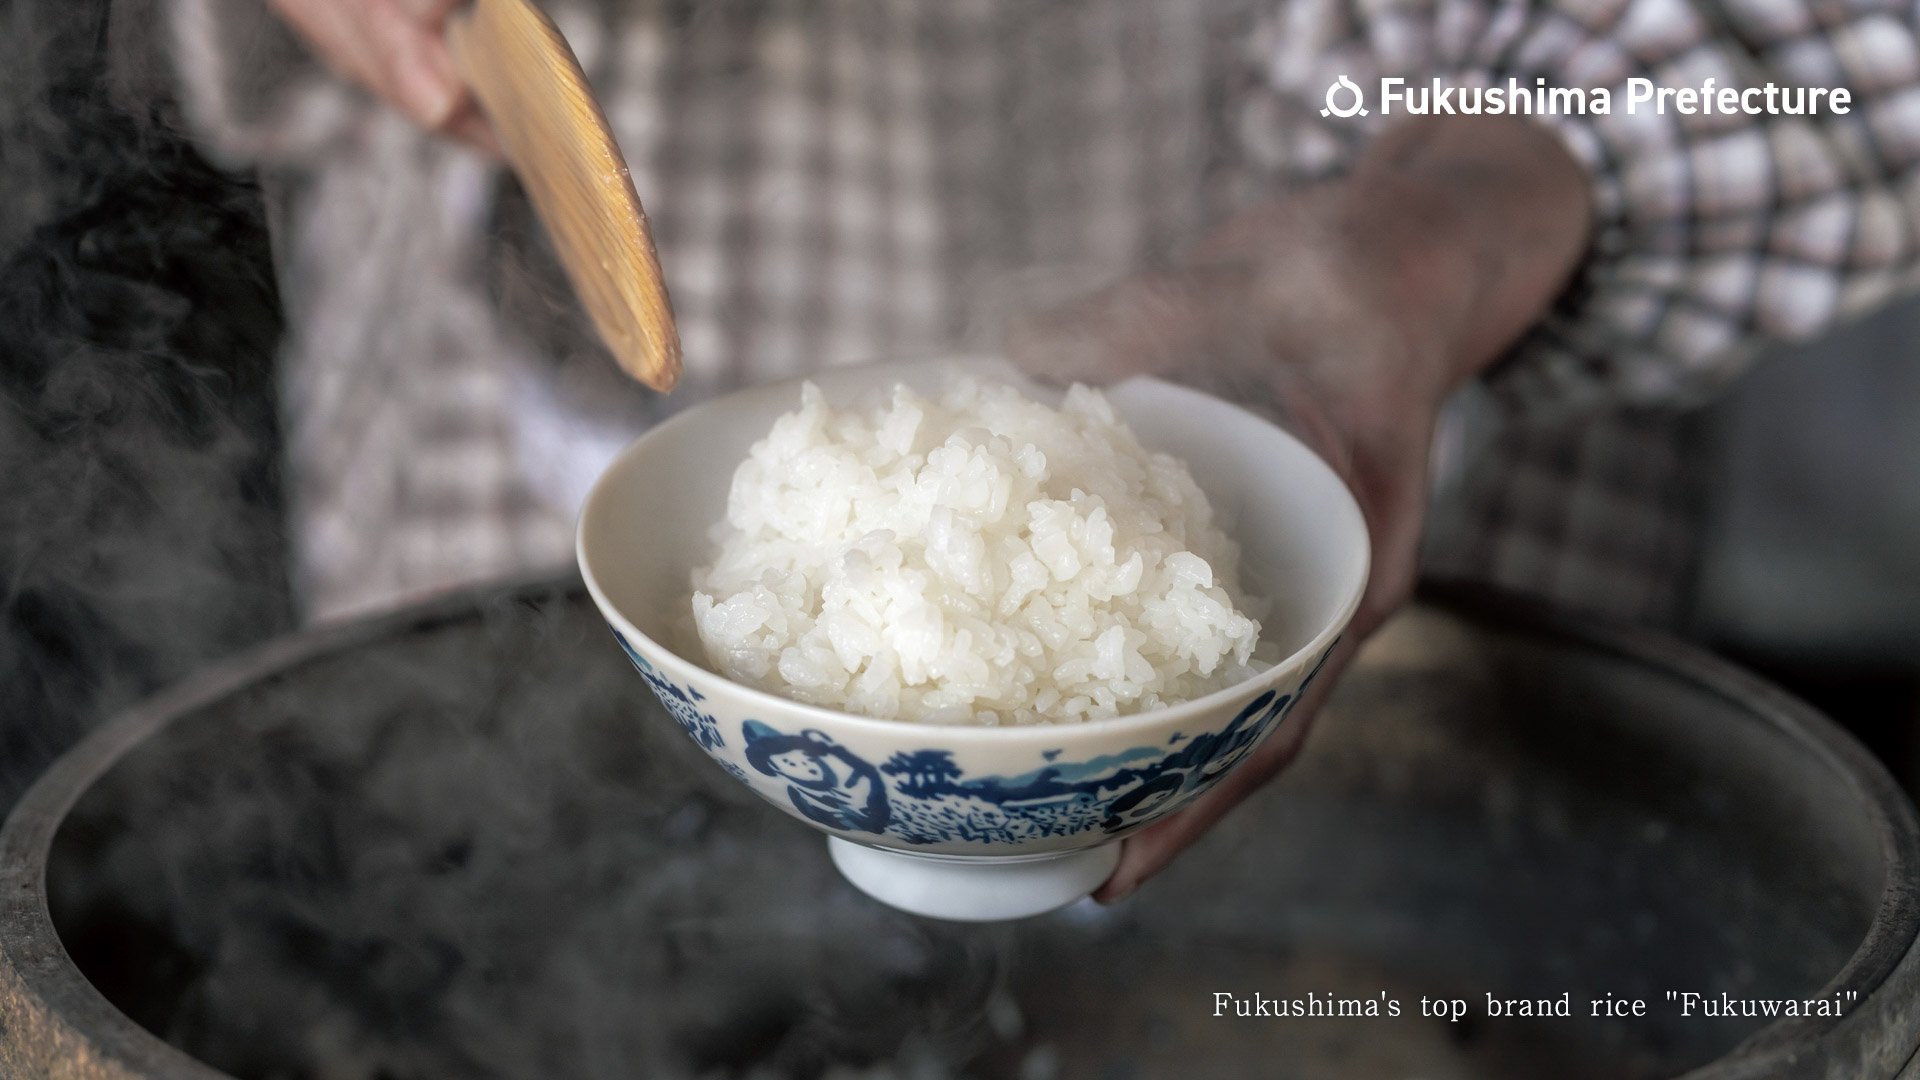 Fukushima's top brand rice Fukuwarai